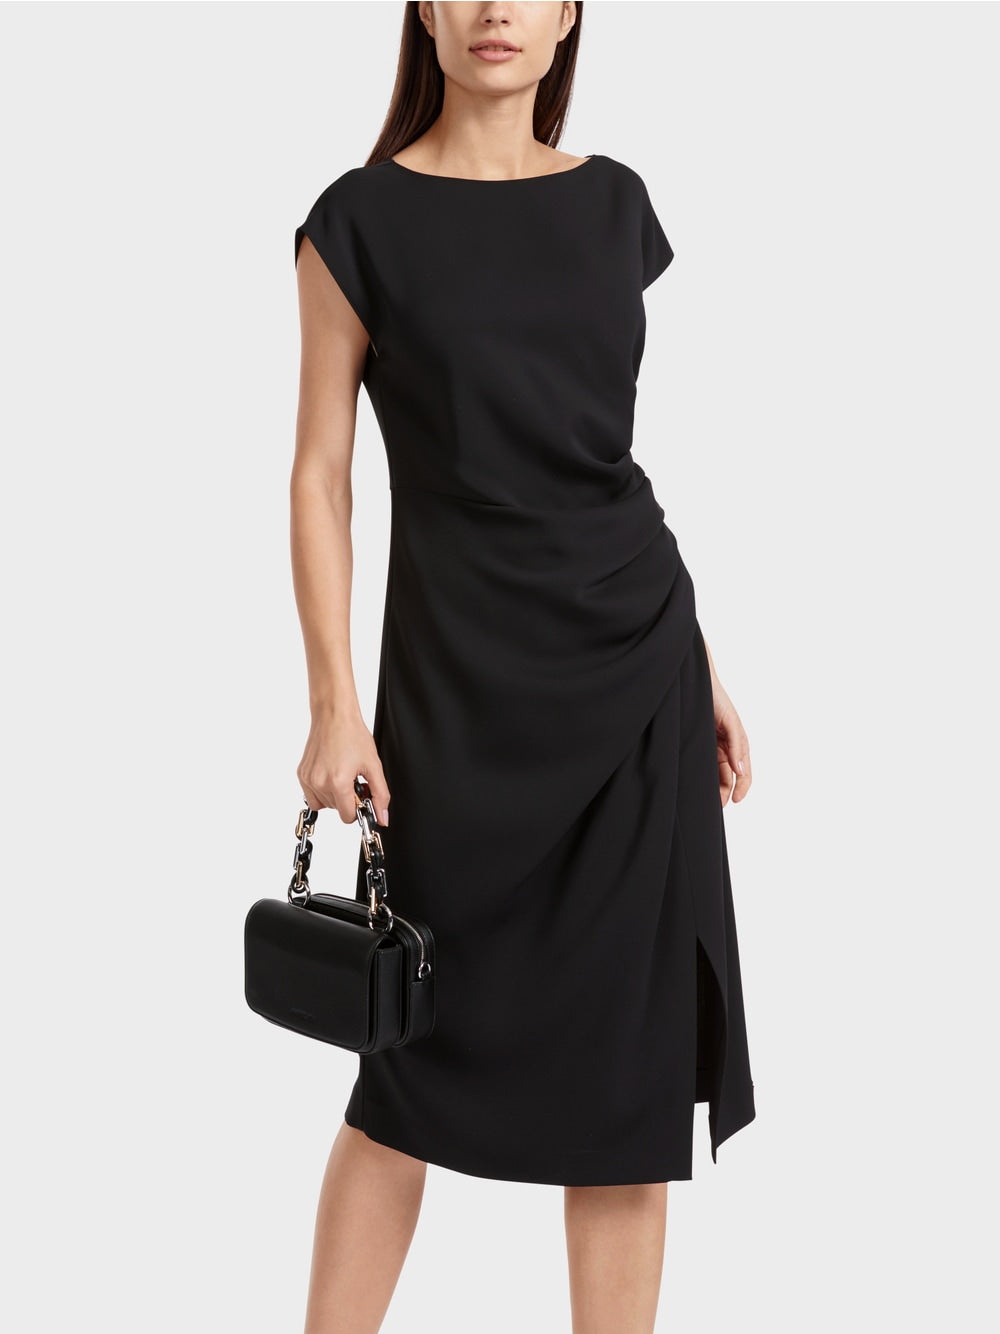 Black Wrap-look dress